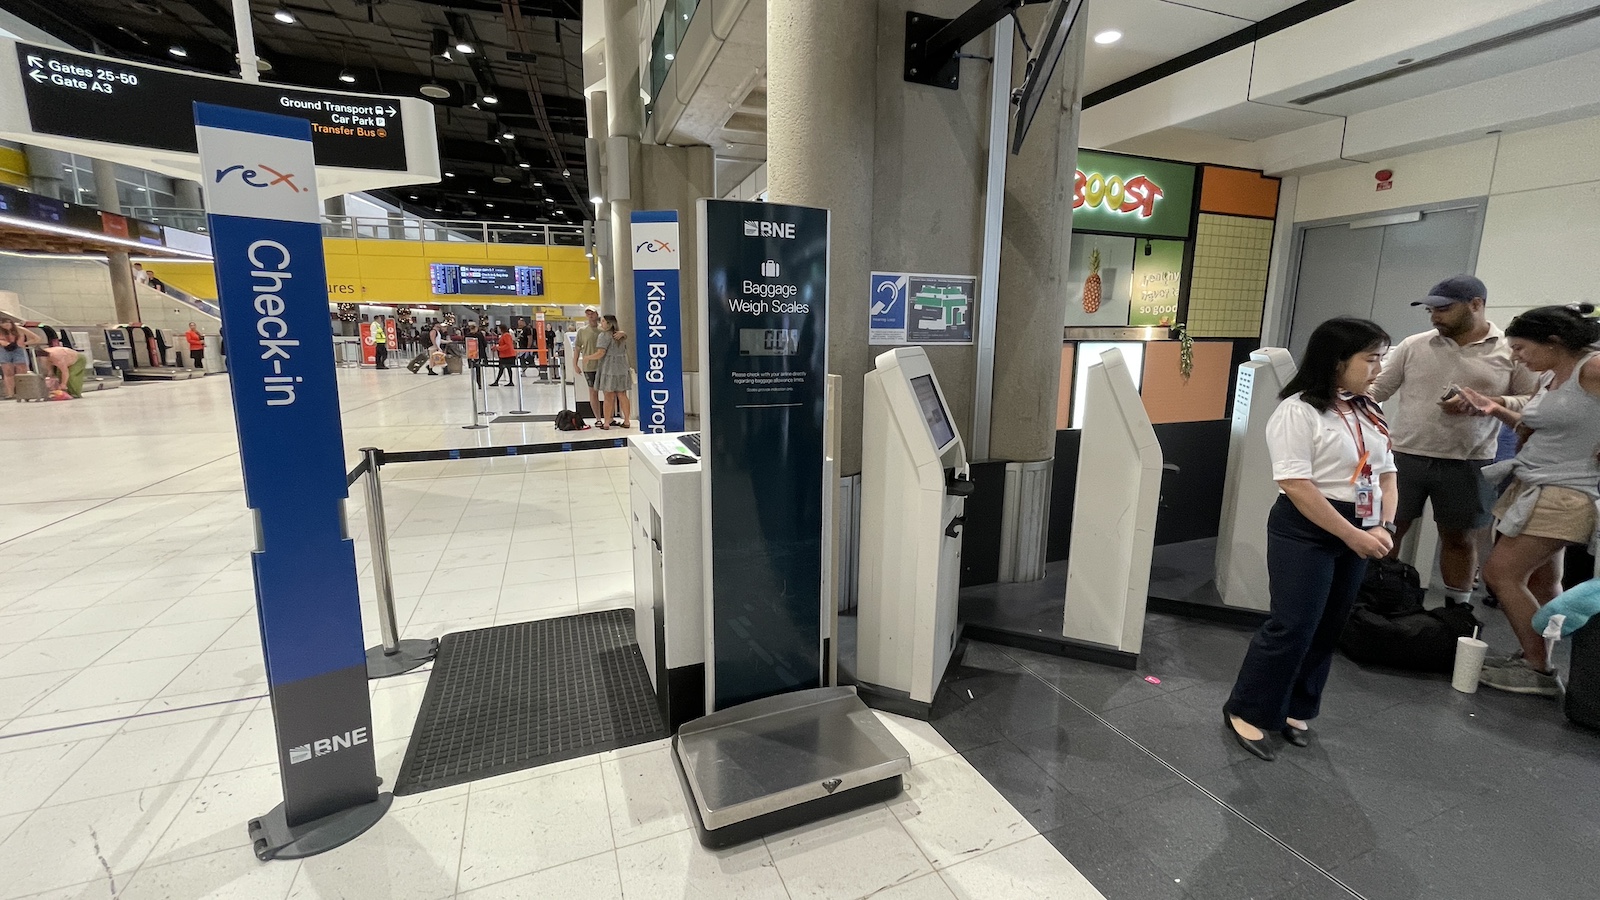 Rex Airlines Brisbane to Sydney Brisbane Airport Kiosk Bag Drop Check-in Point Hacks